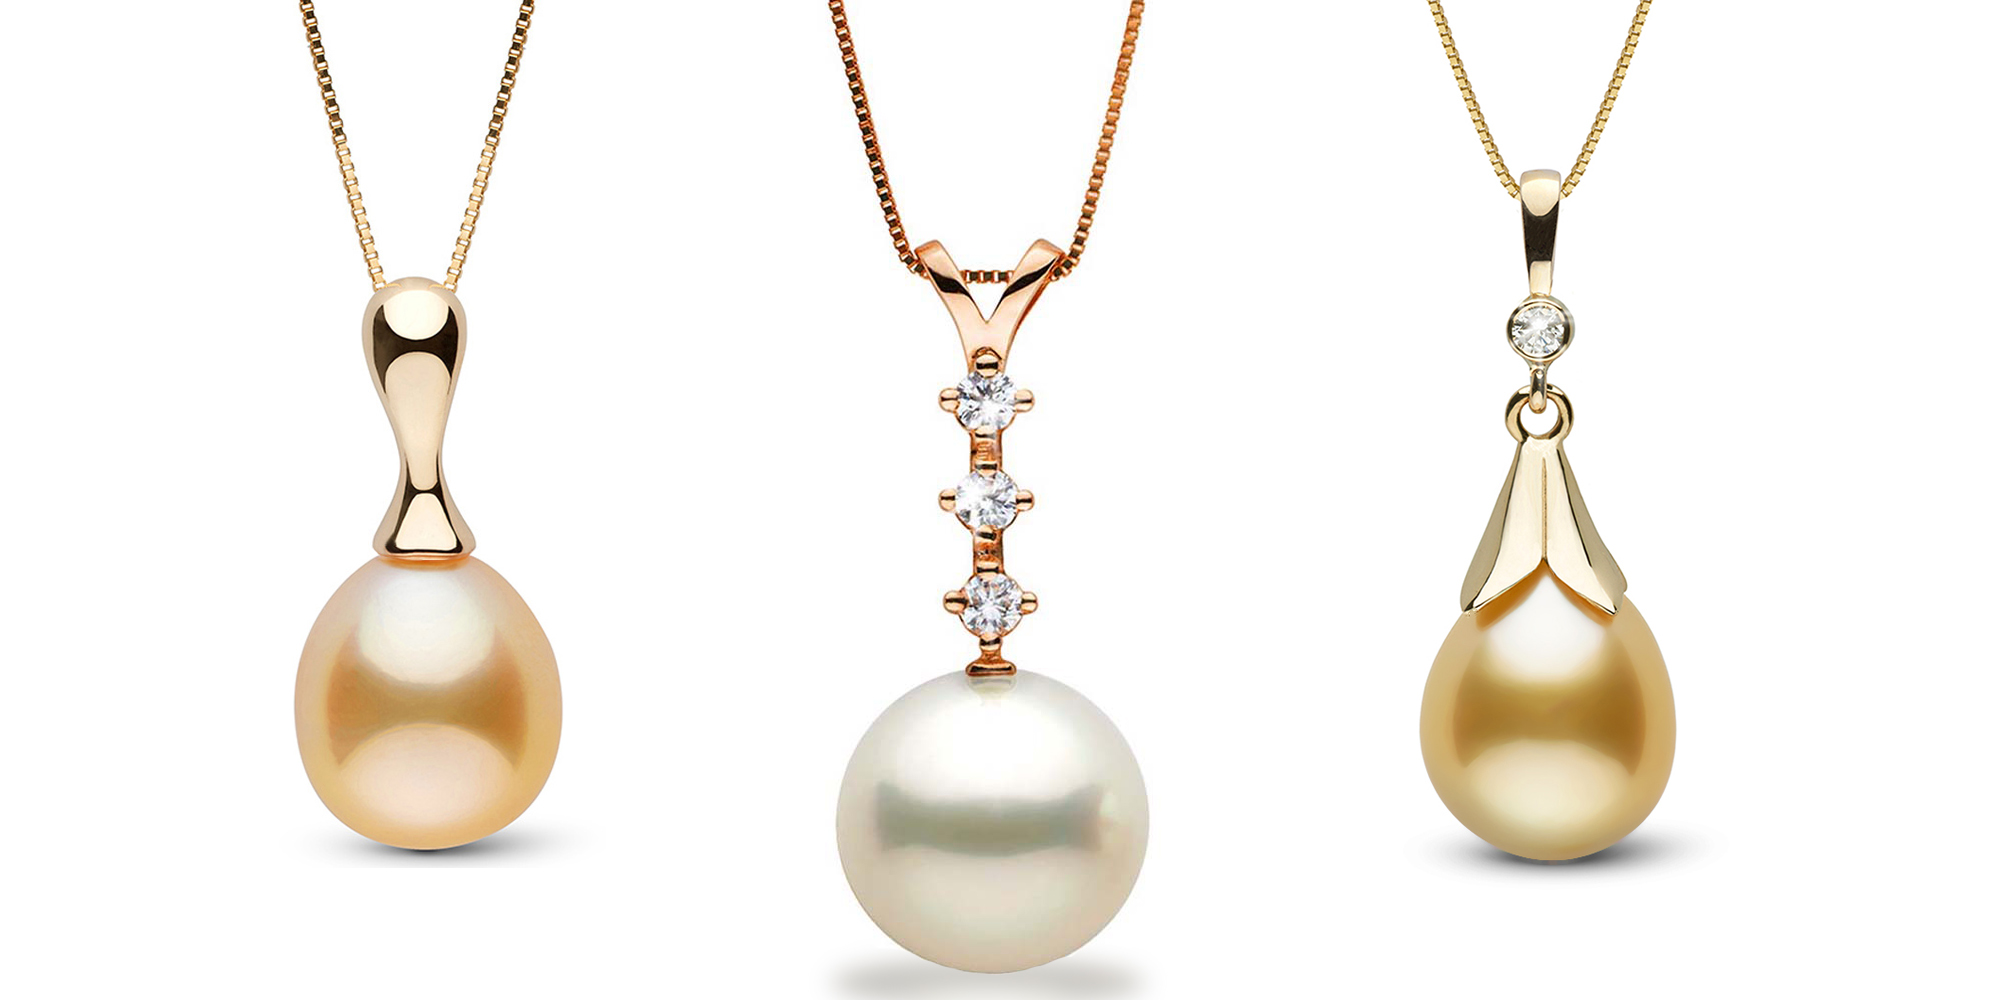 South Sea Pearl Jewelry: Pearl Pendants